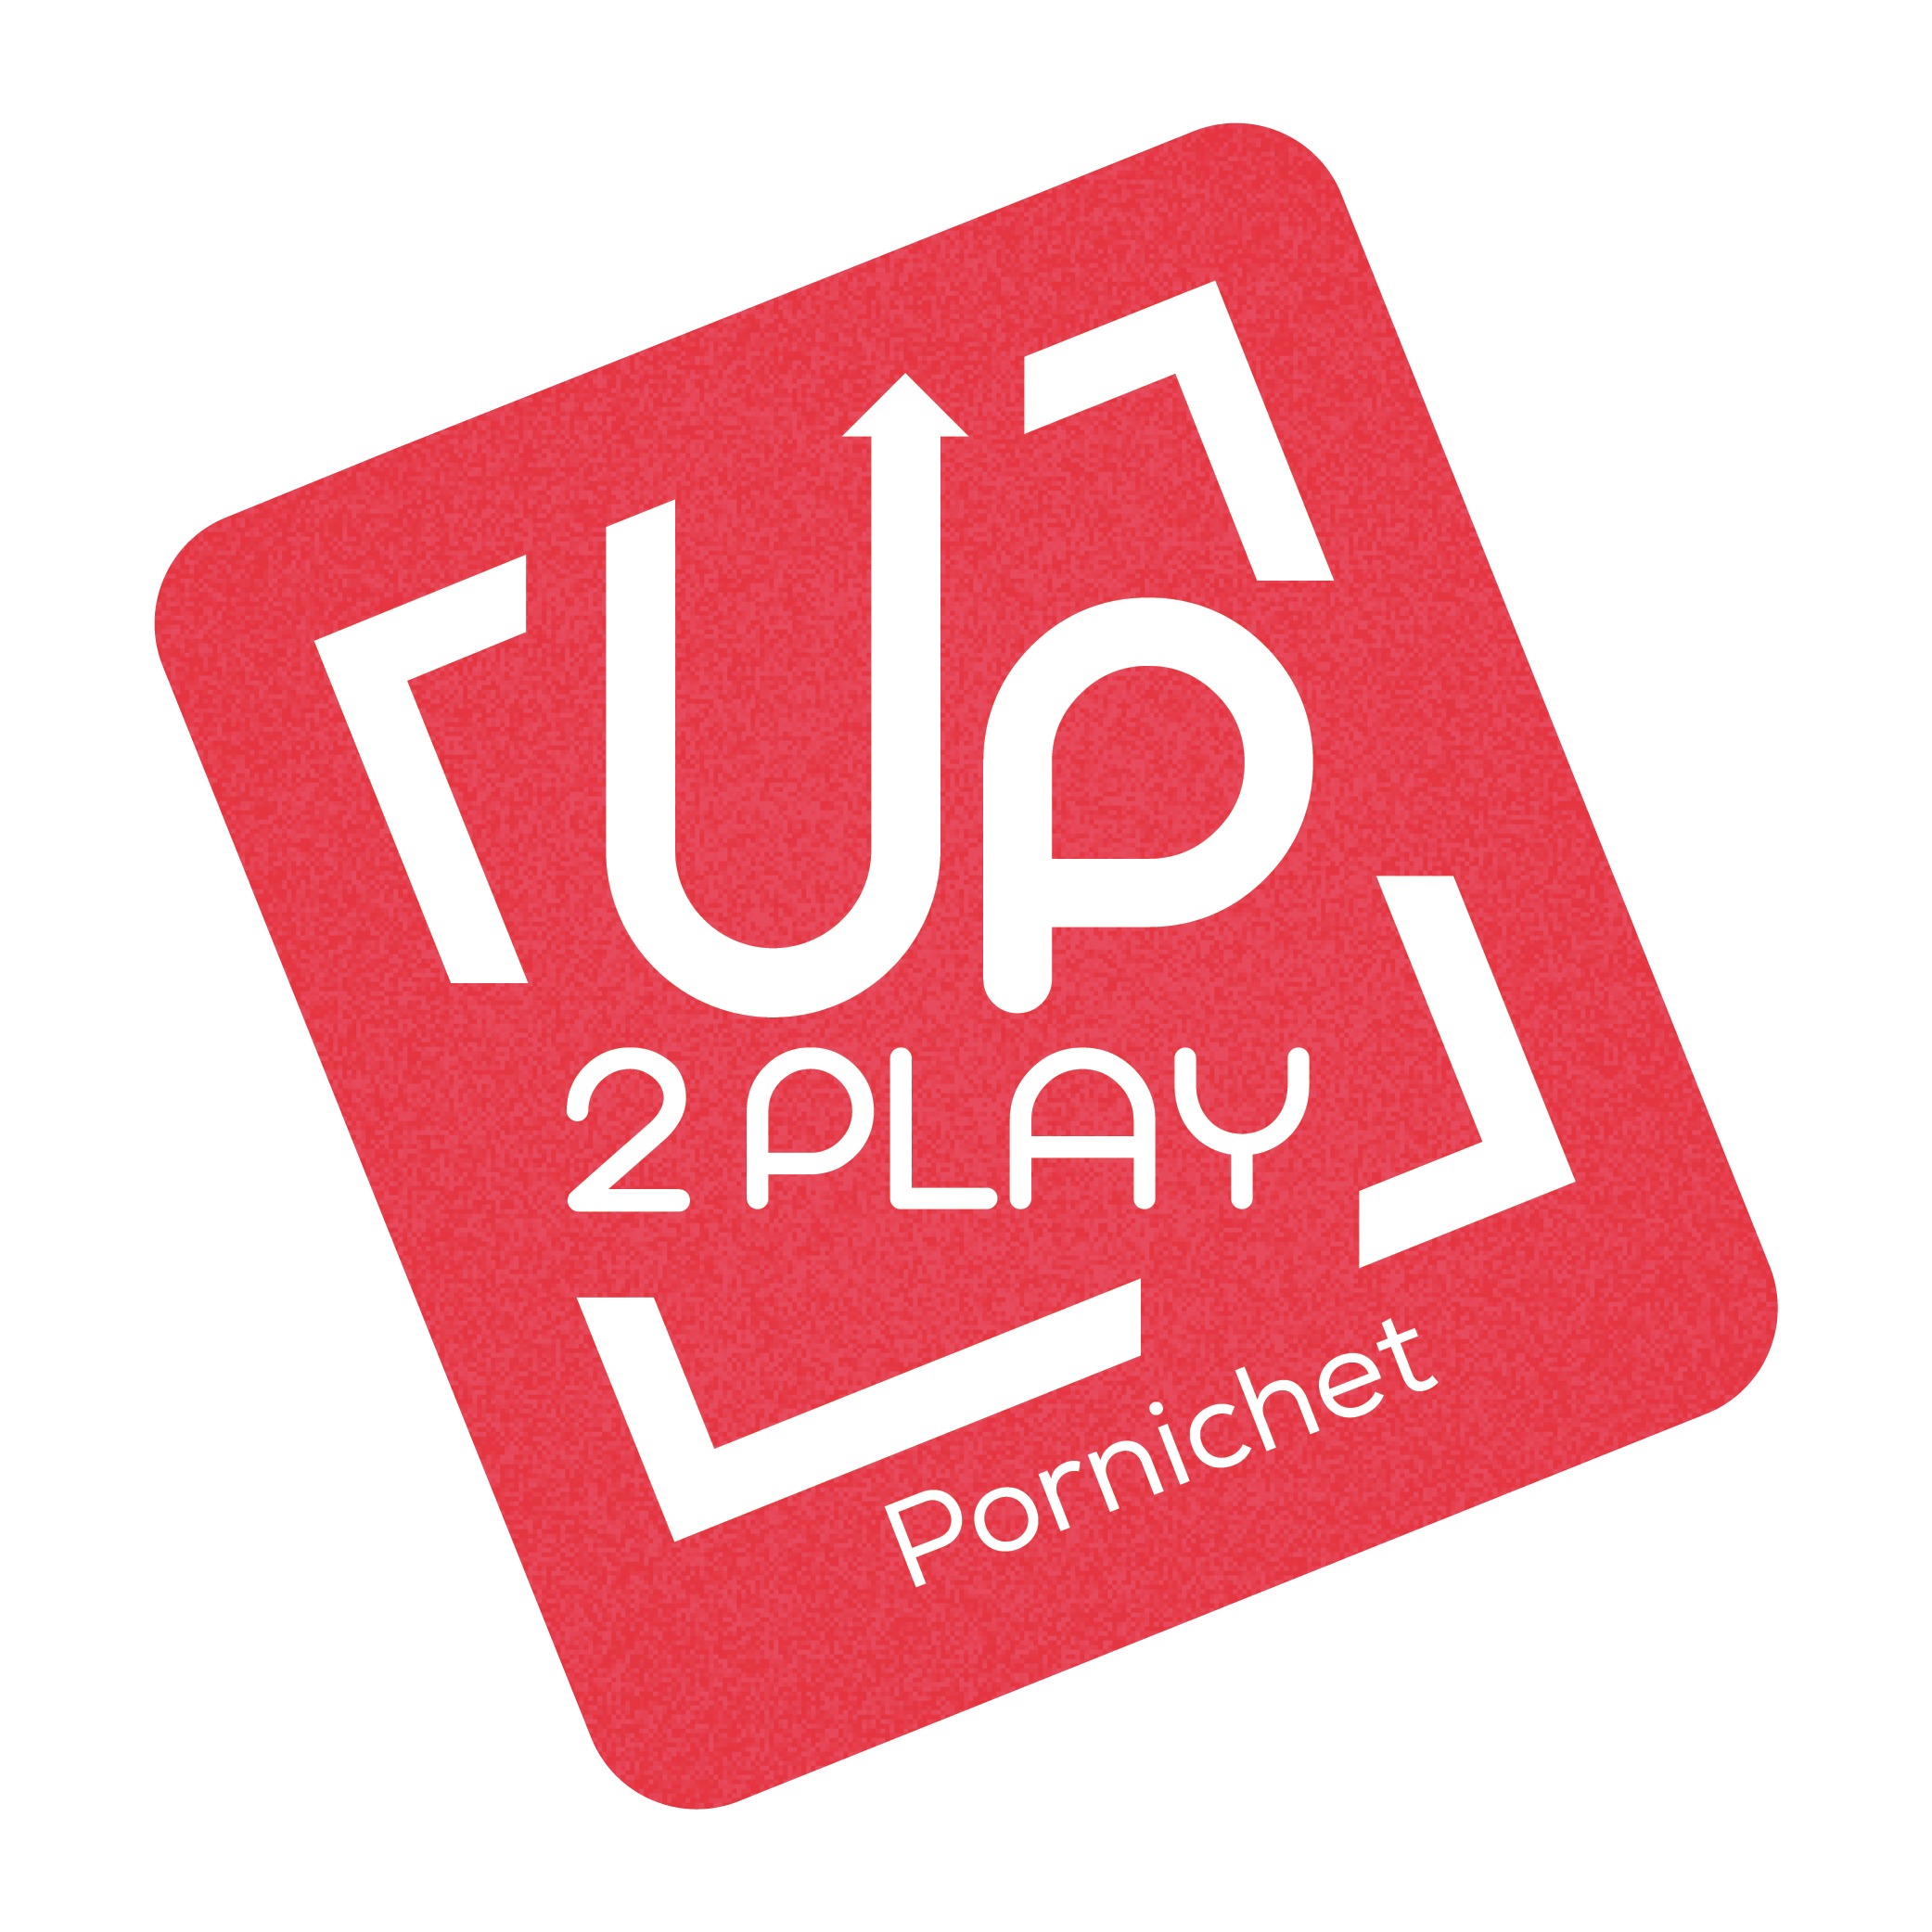 Logo up2play pornichet